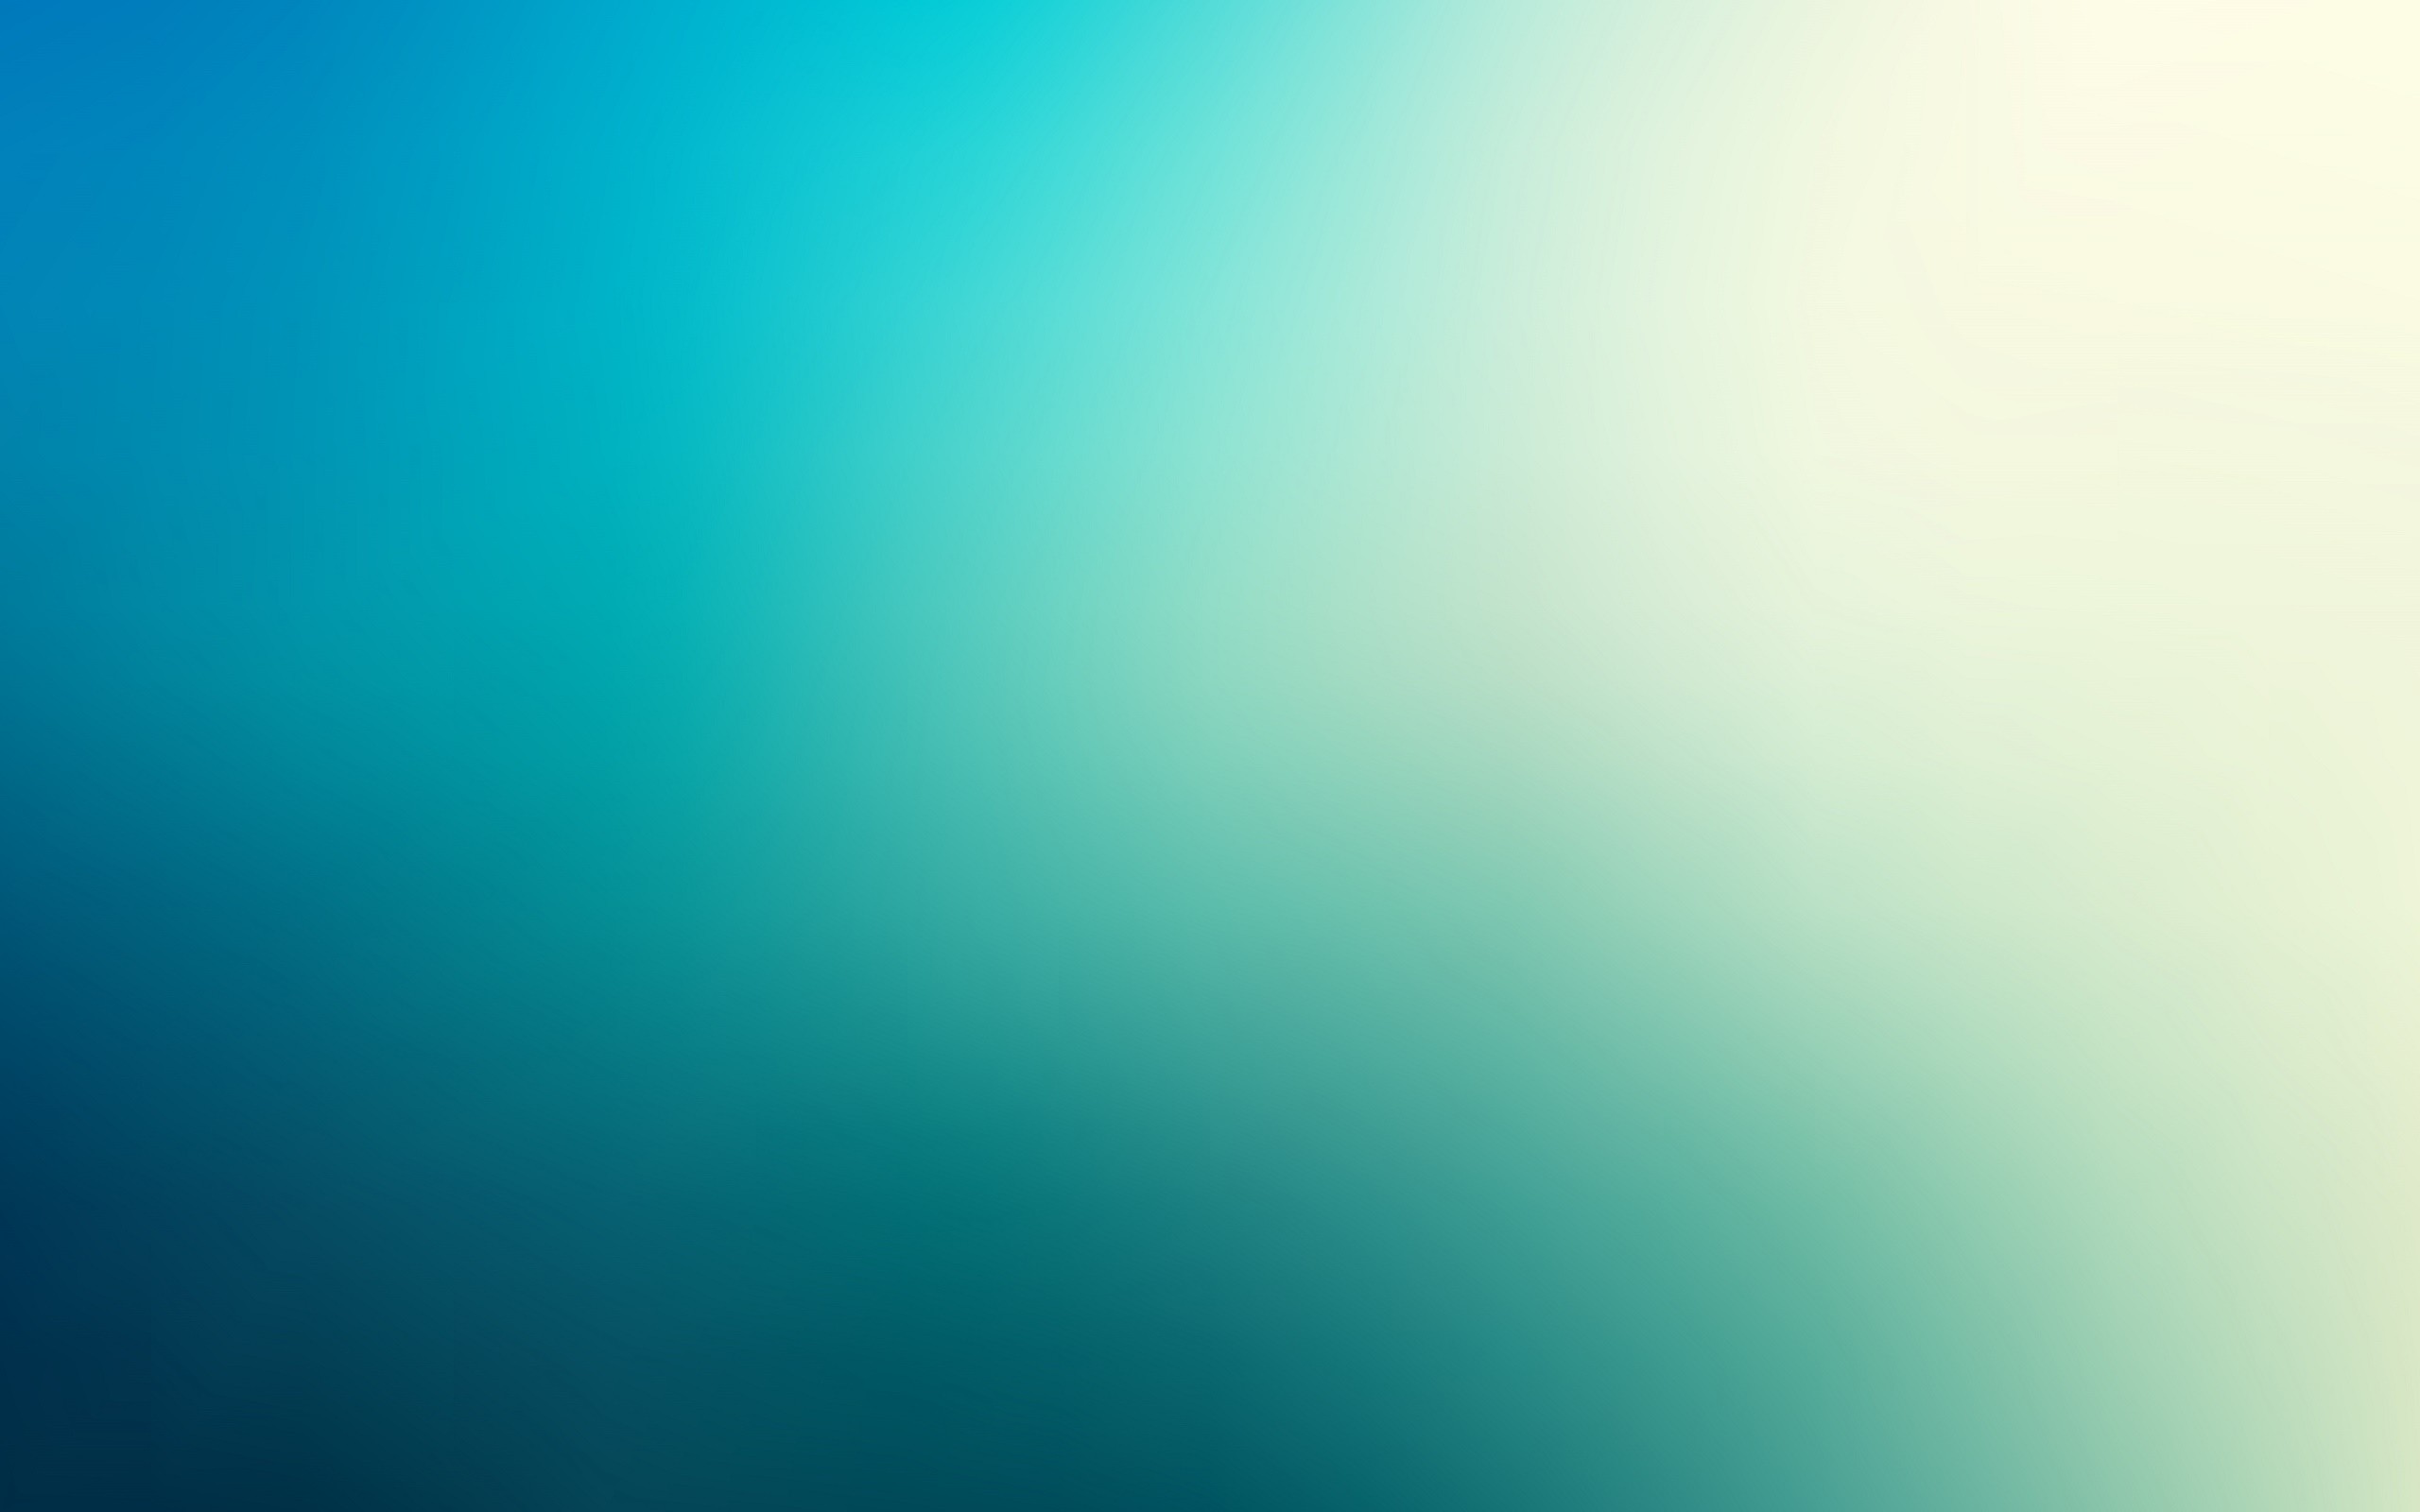 General 2560x1600 minimalism blurred gradient blue texture turquoise cyan digital art simple background